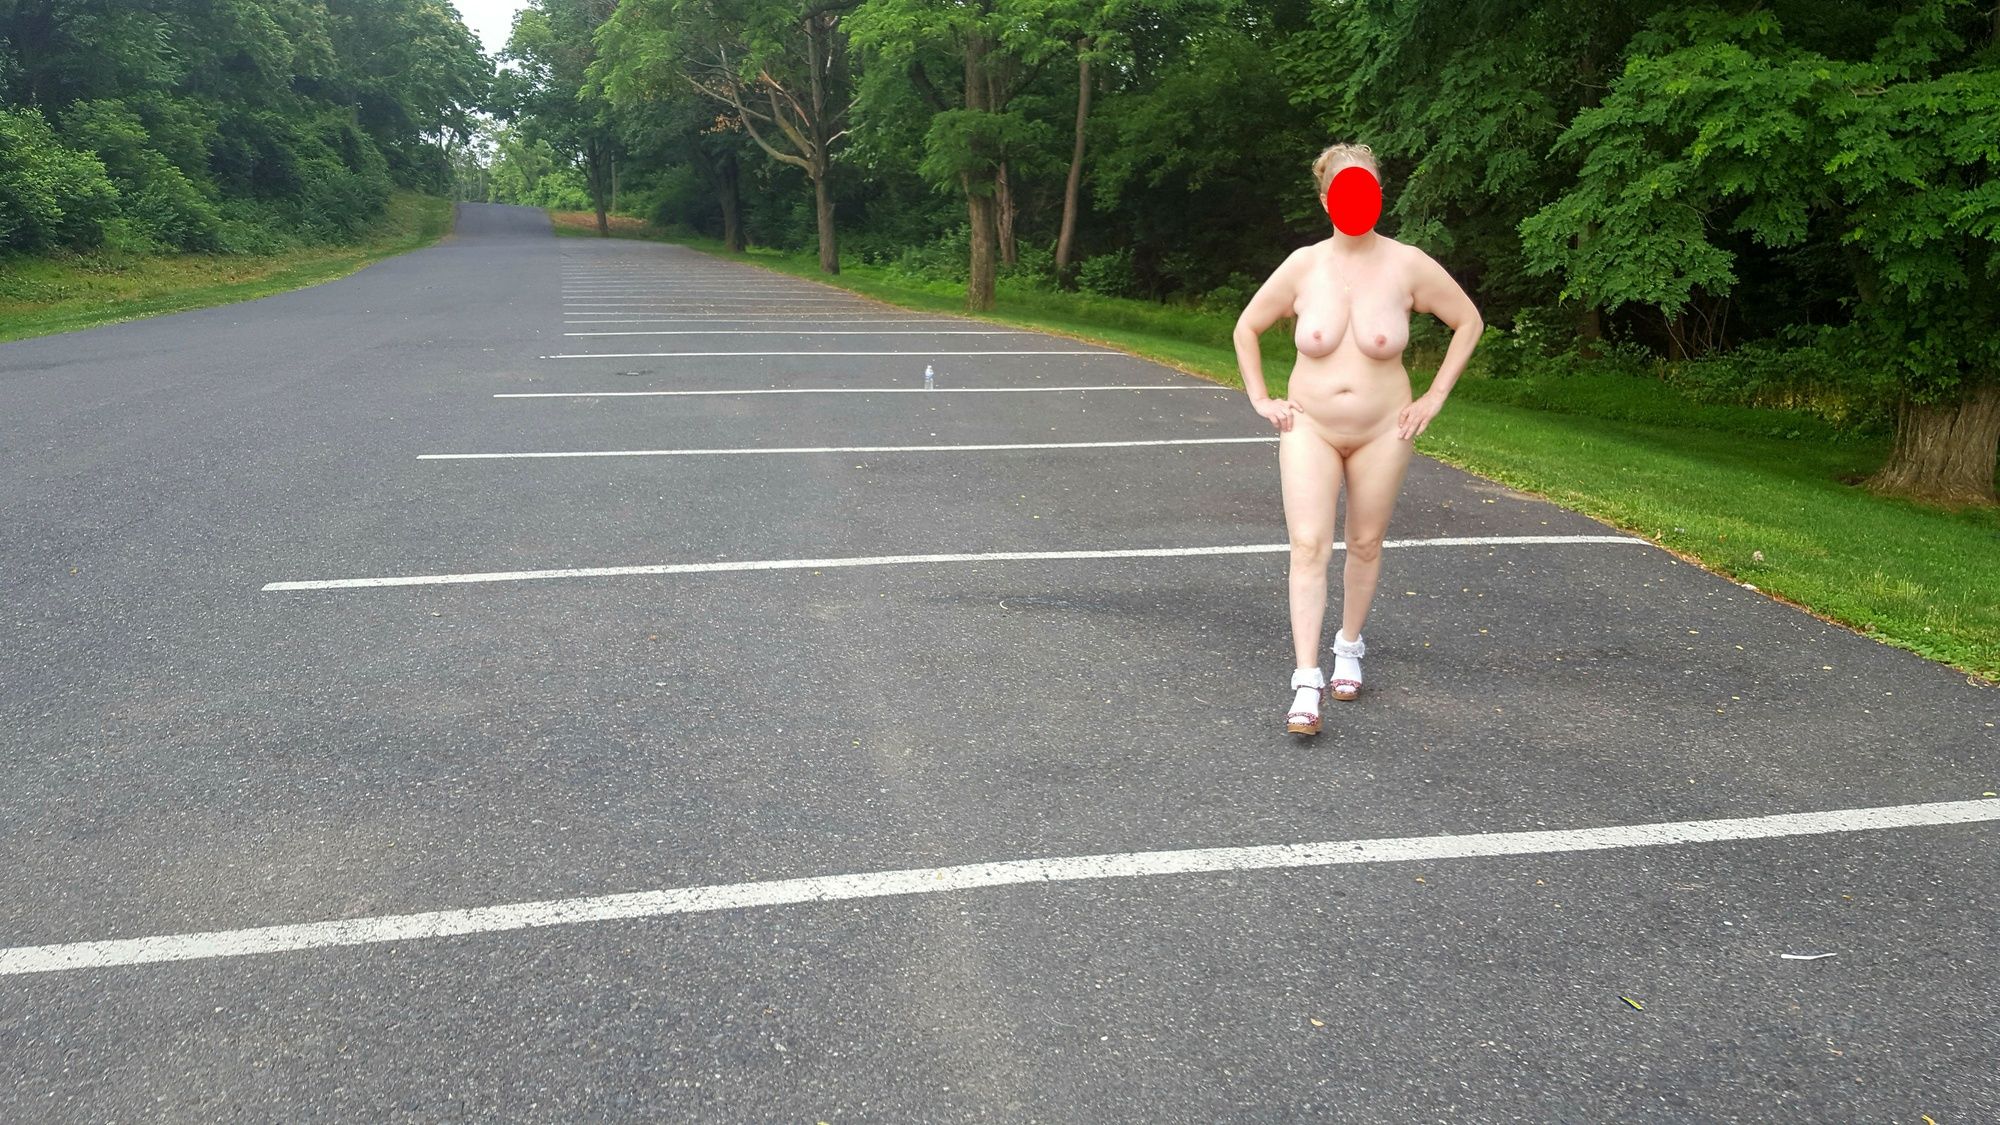 naked parking lot walk #37